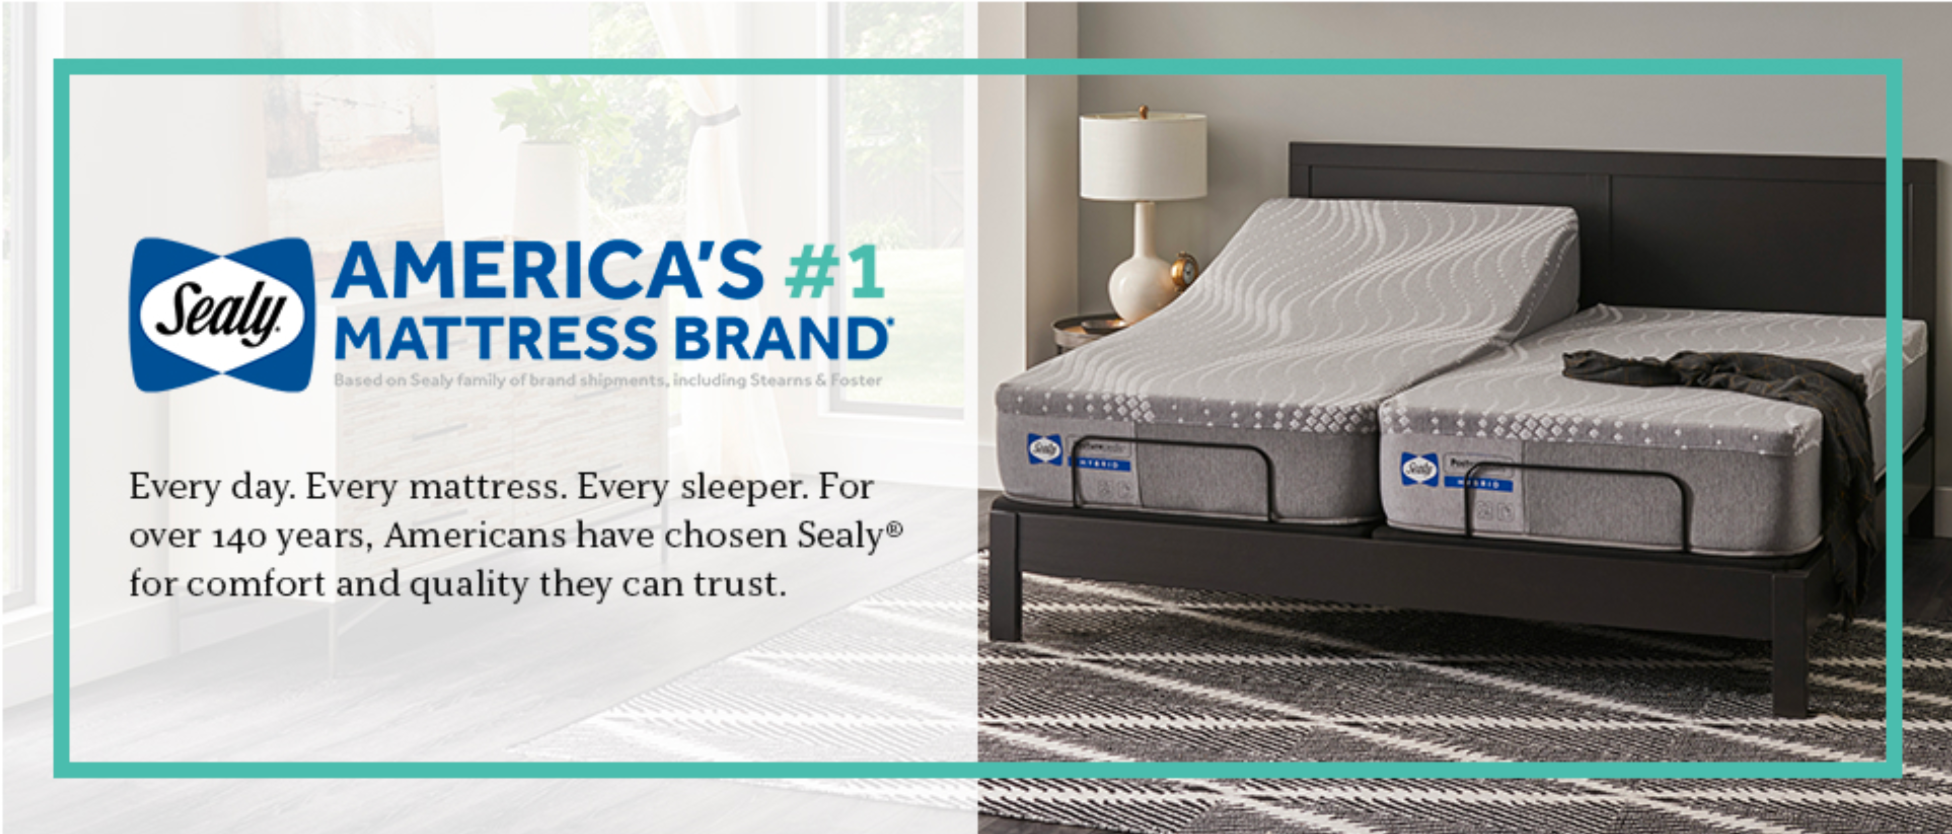 america's #1 mattress brand sealy